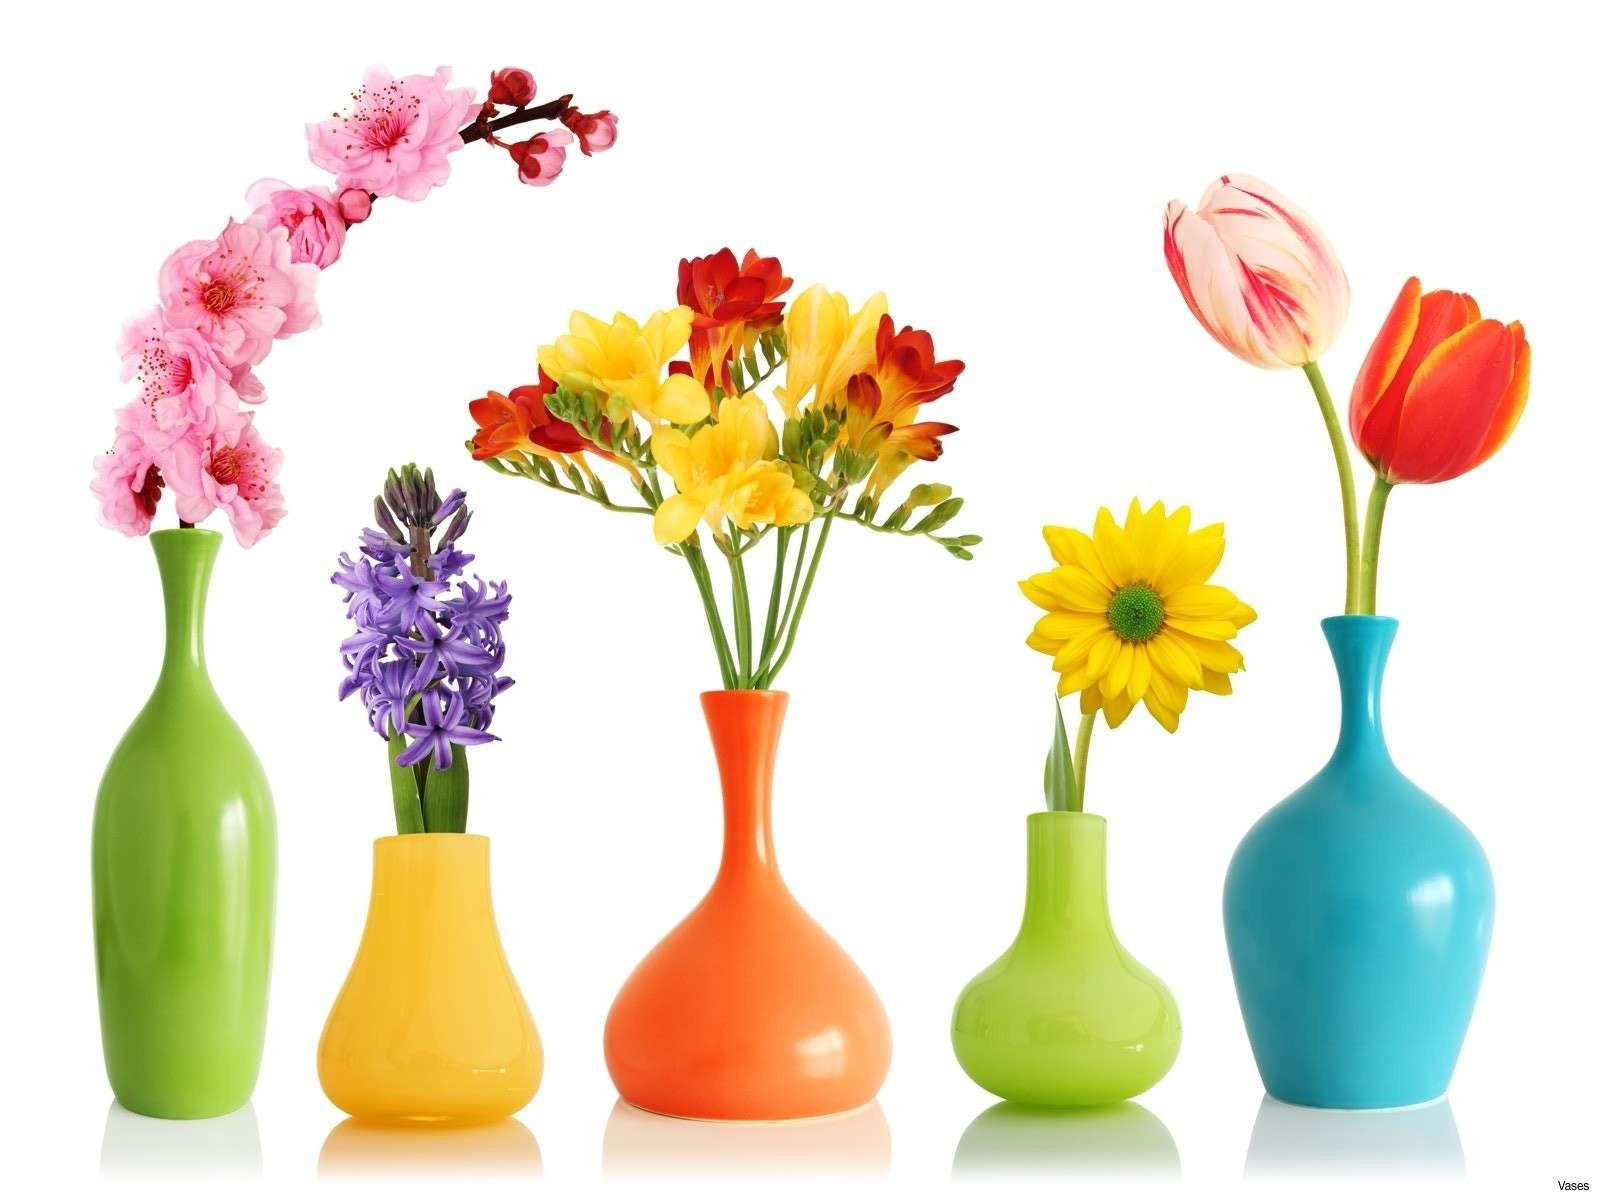 Tall Flower Vases Of Awesome Colorful Etched Vasesh Vases Flower Vase I 0d Design Ideas Intended for Awesome Colorful Etched Vasesh Vases Flower Vase I 0d Design Ideas Flower